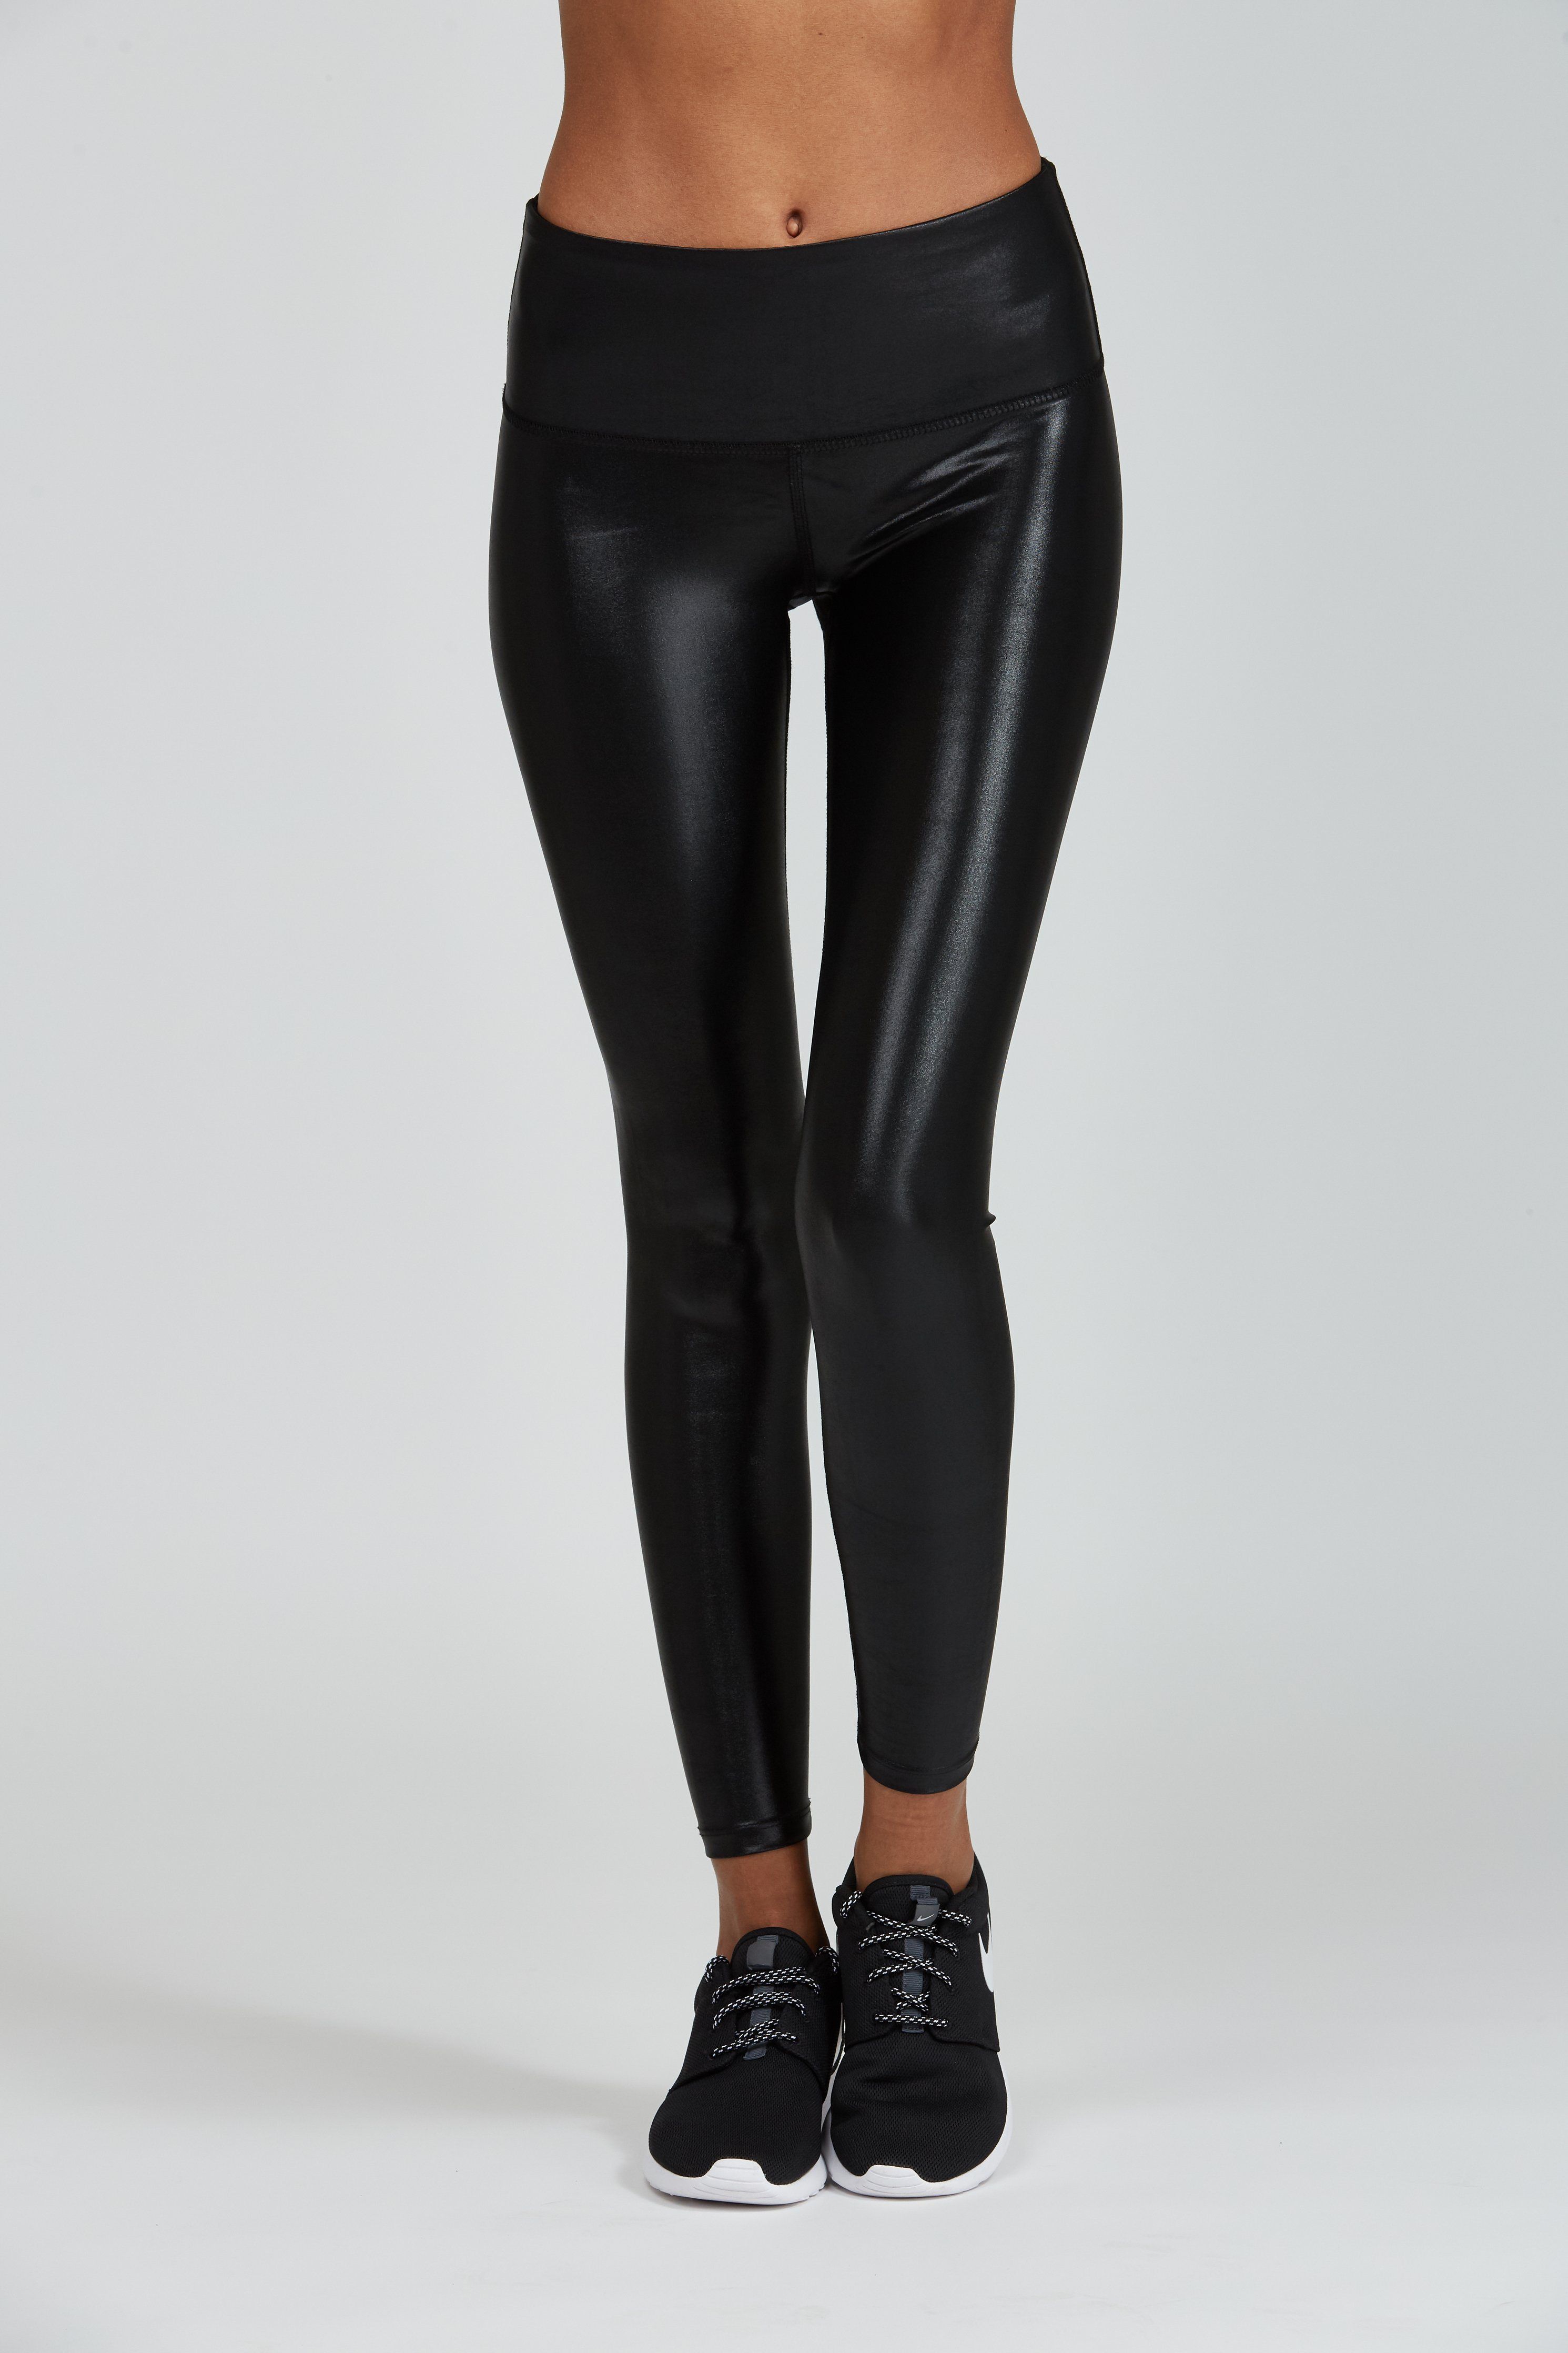 target spanx leather leggings